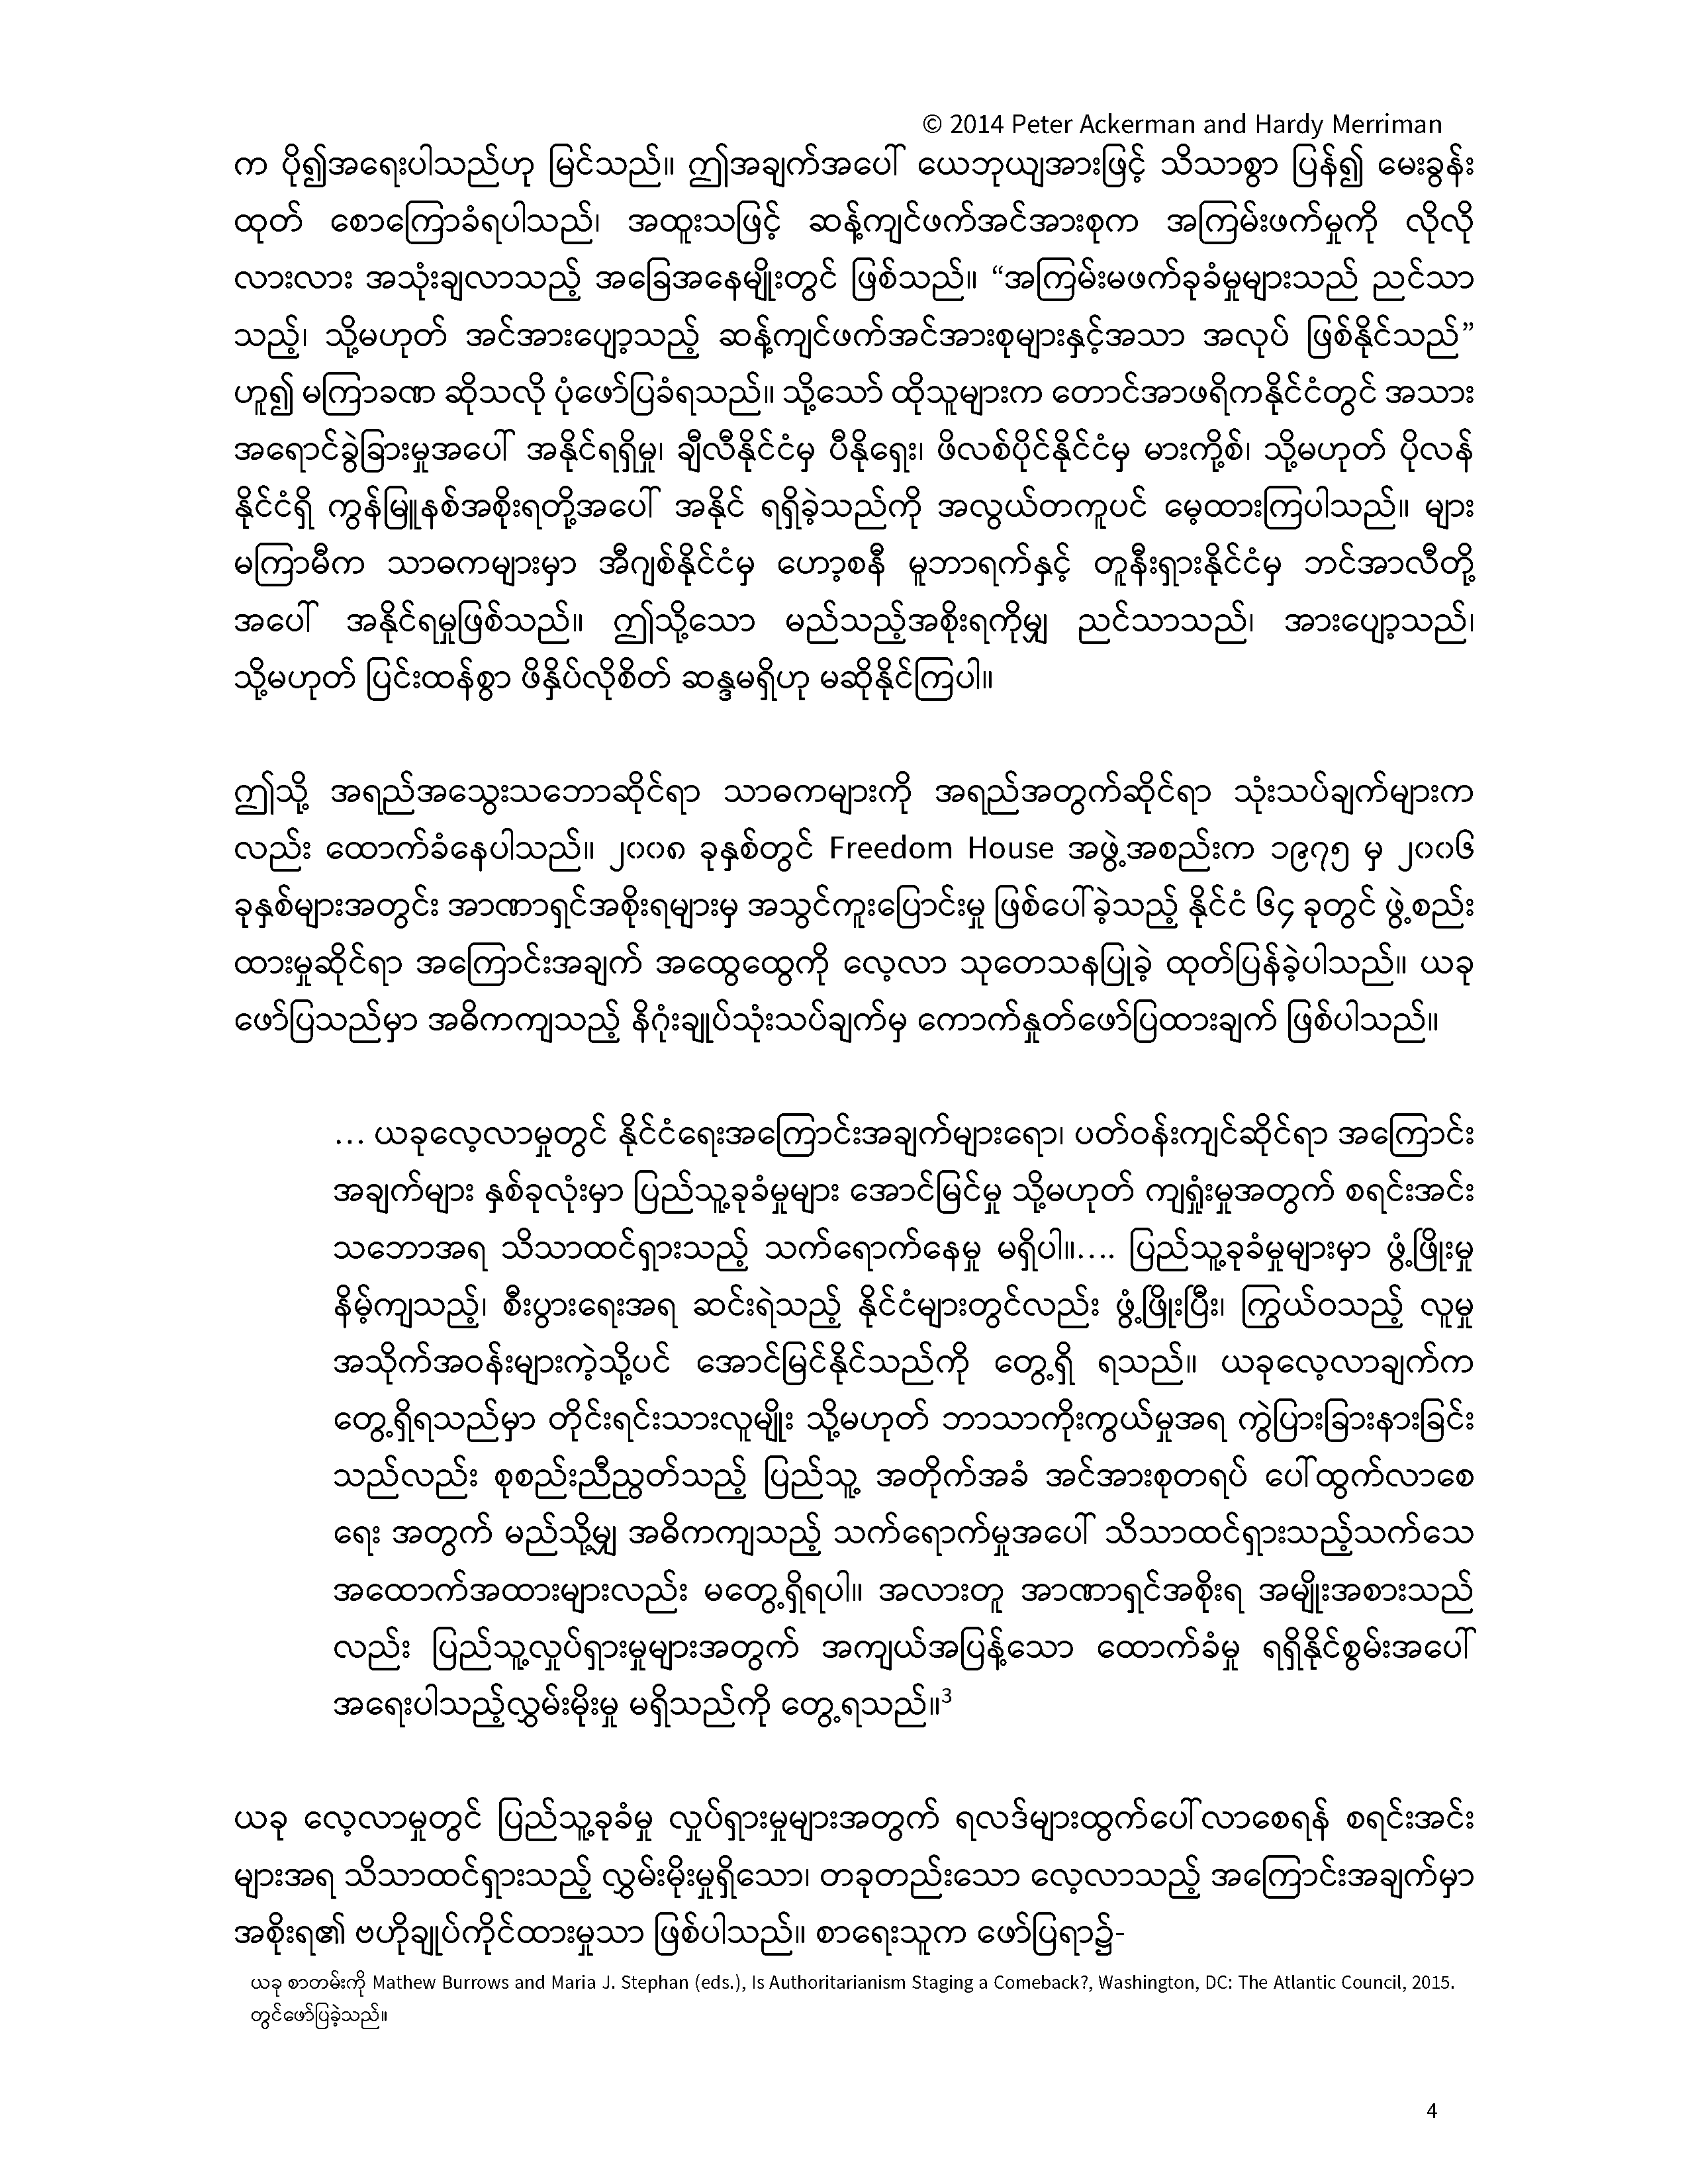 The Checklist for Ending Tyranny (Burmese)